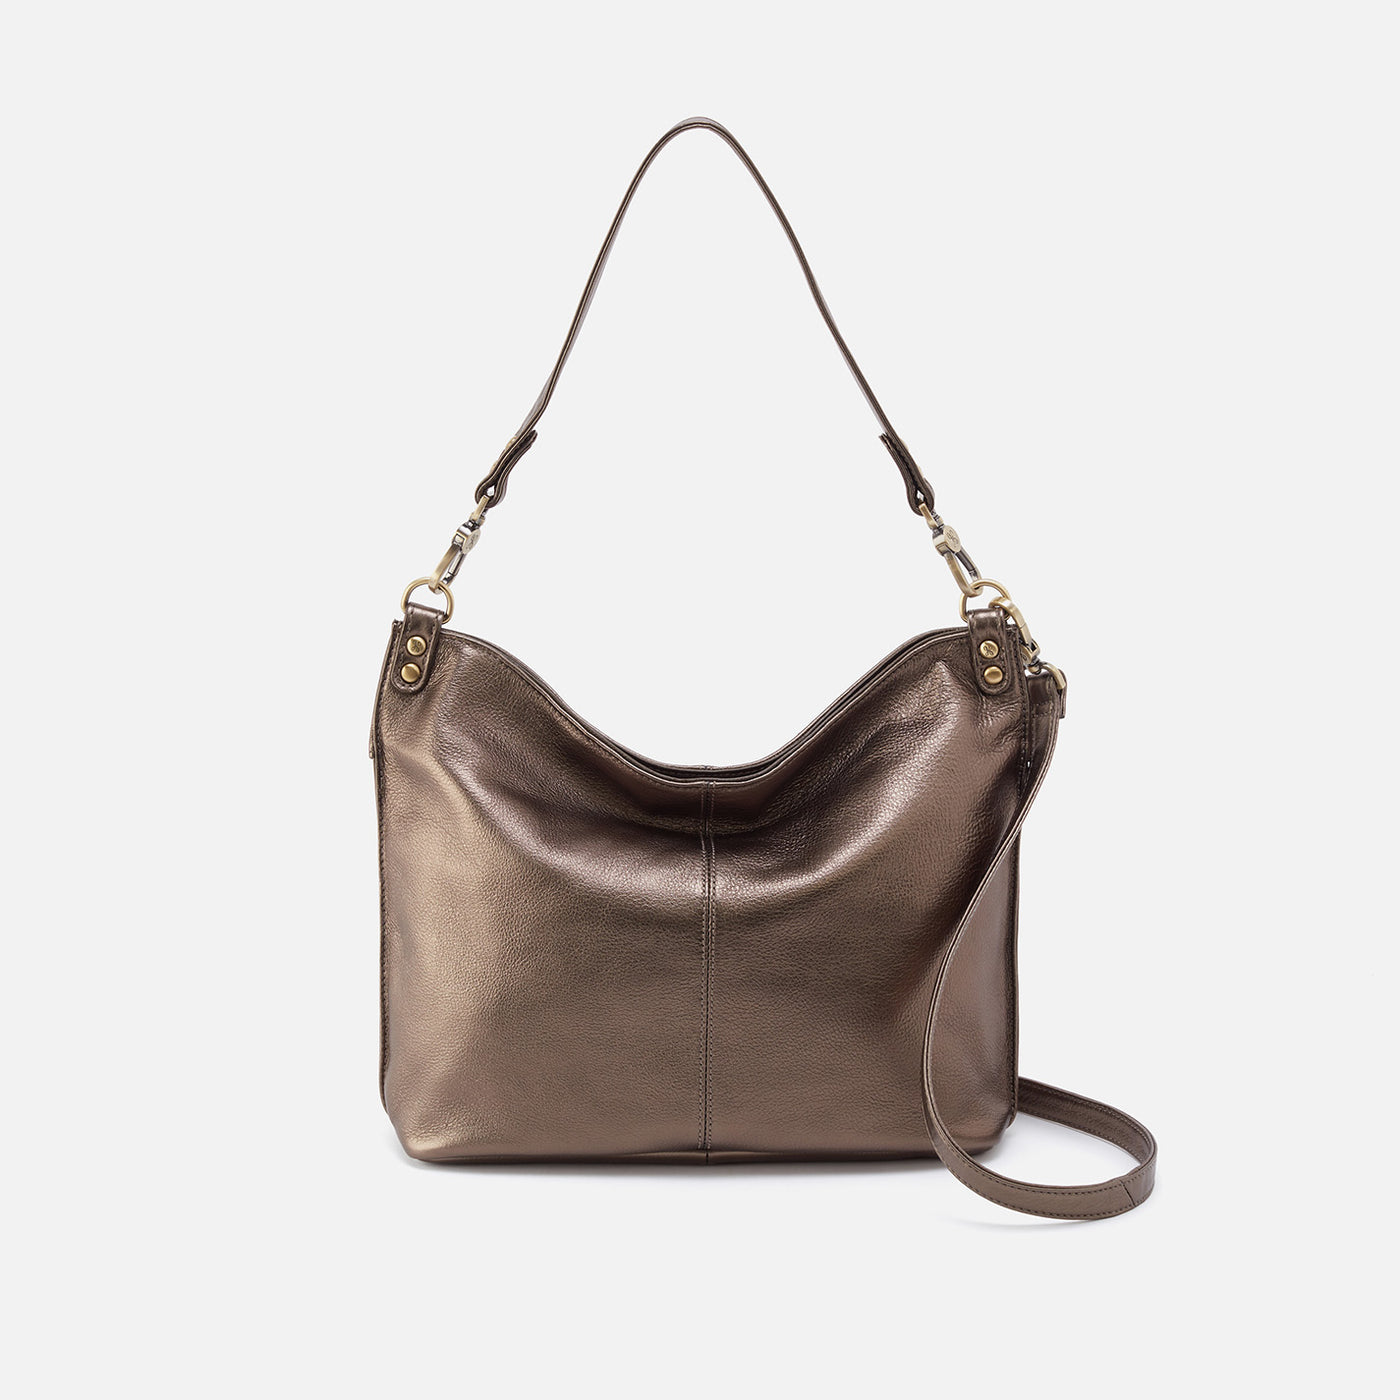 Longchamp Hobo Bag Gold Patent Leather Handbag Women's -  Hong Kong